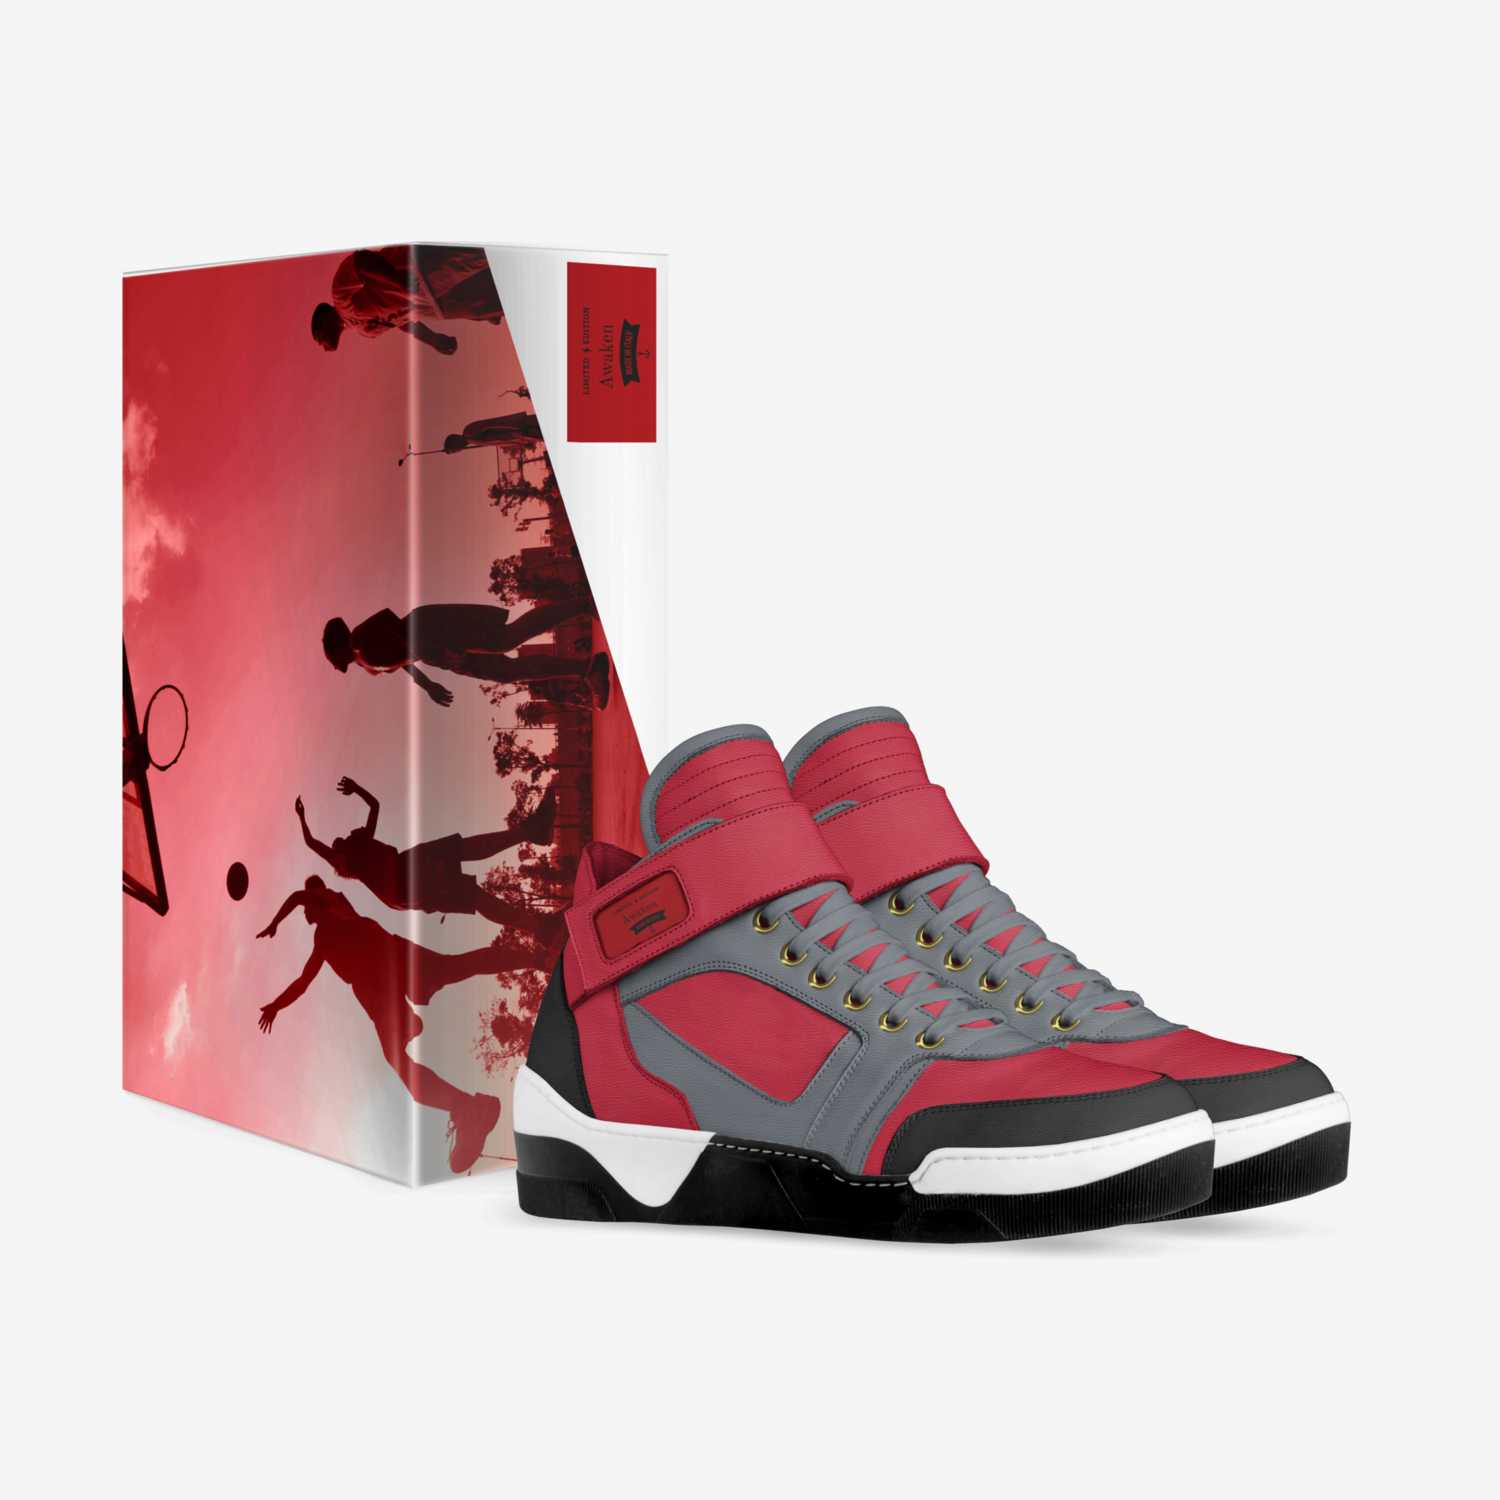 Awaken  custom made in Italy shoes by Isaiah Benton Cates | Box view